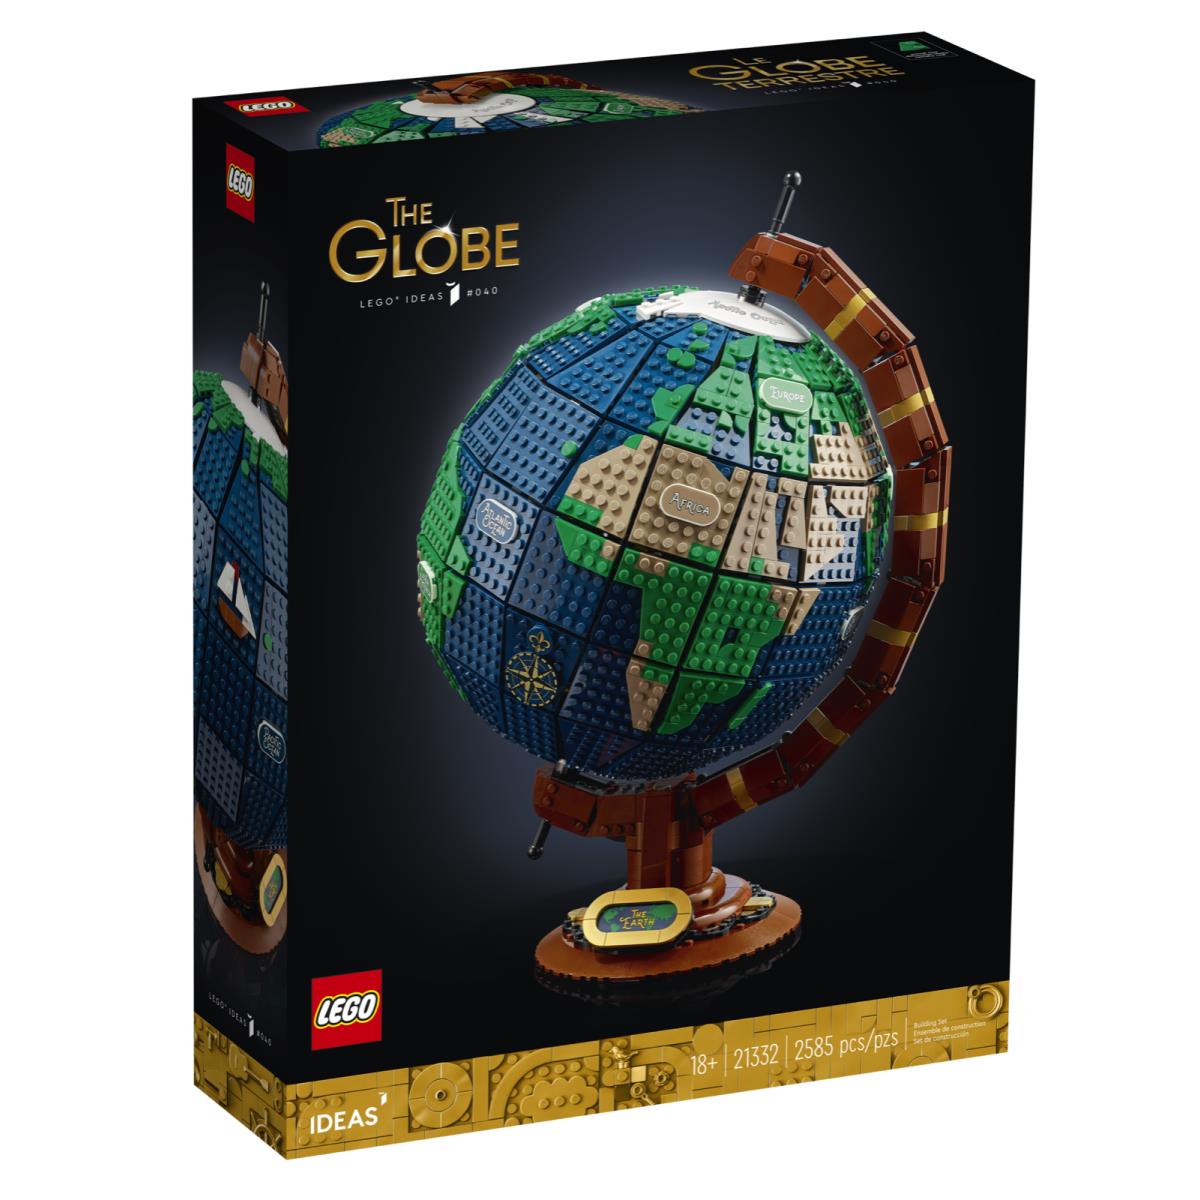 Lego 21332 Ideas The Globe Gift-free Immediate Shipping